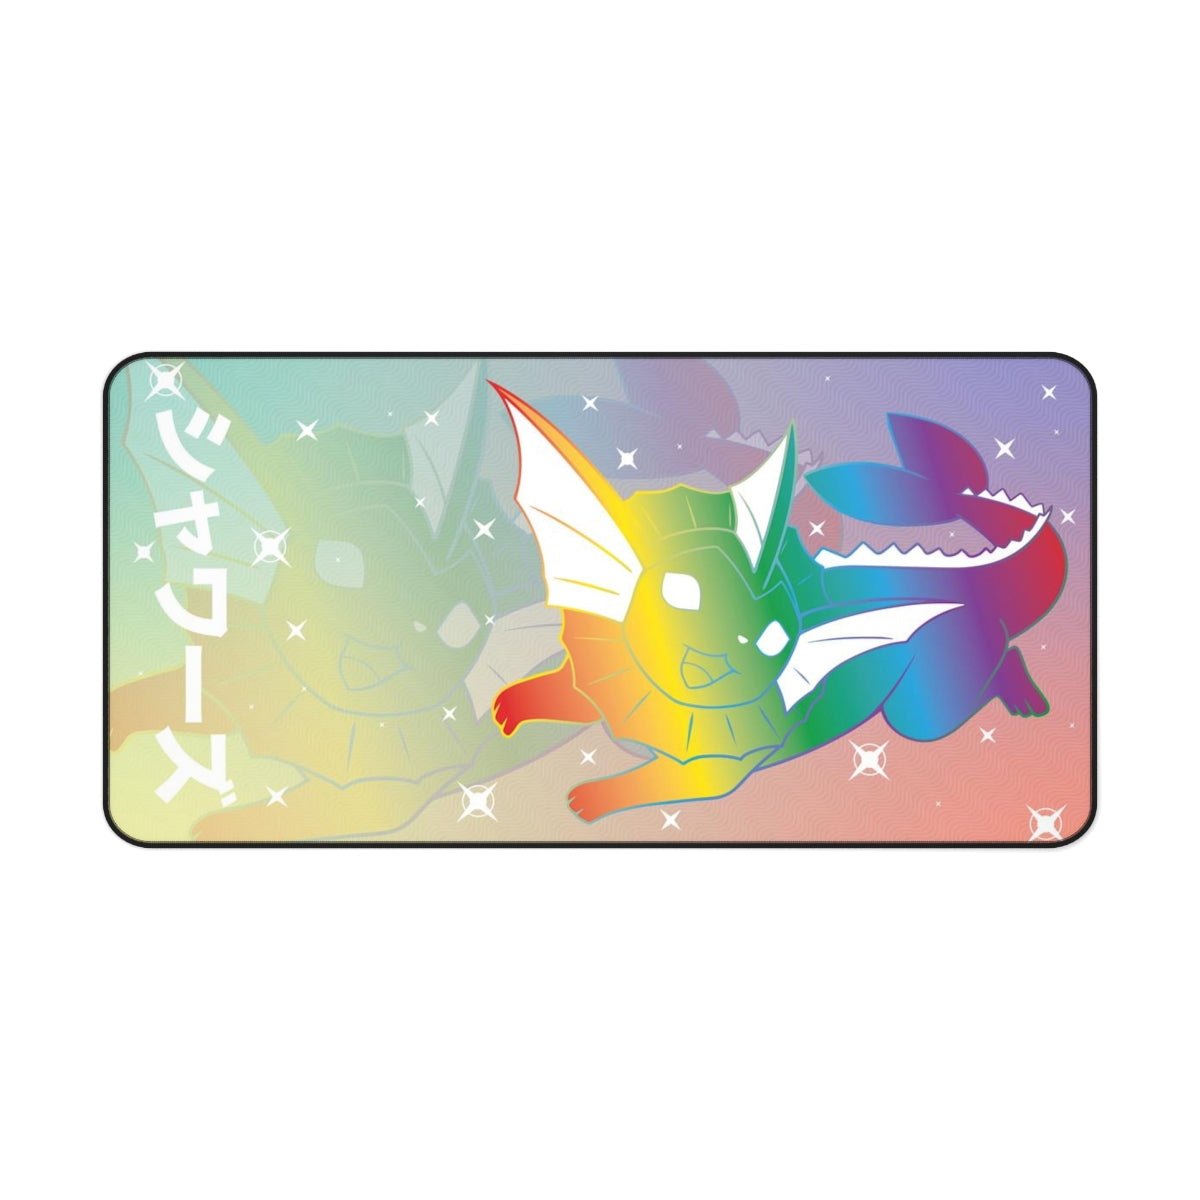 Vaporeon (Rainbow) Playmat